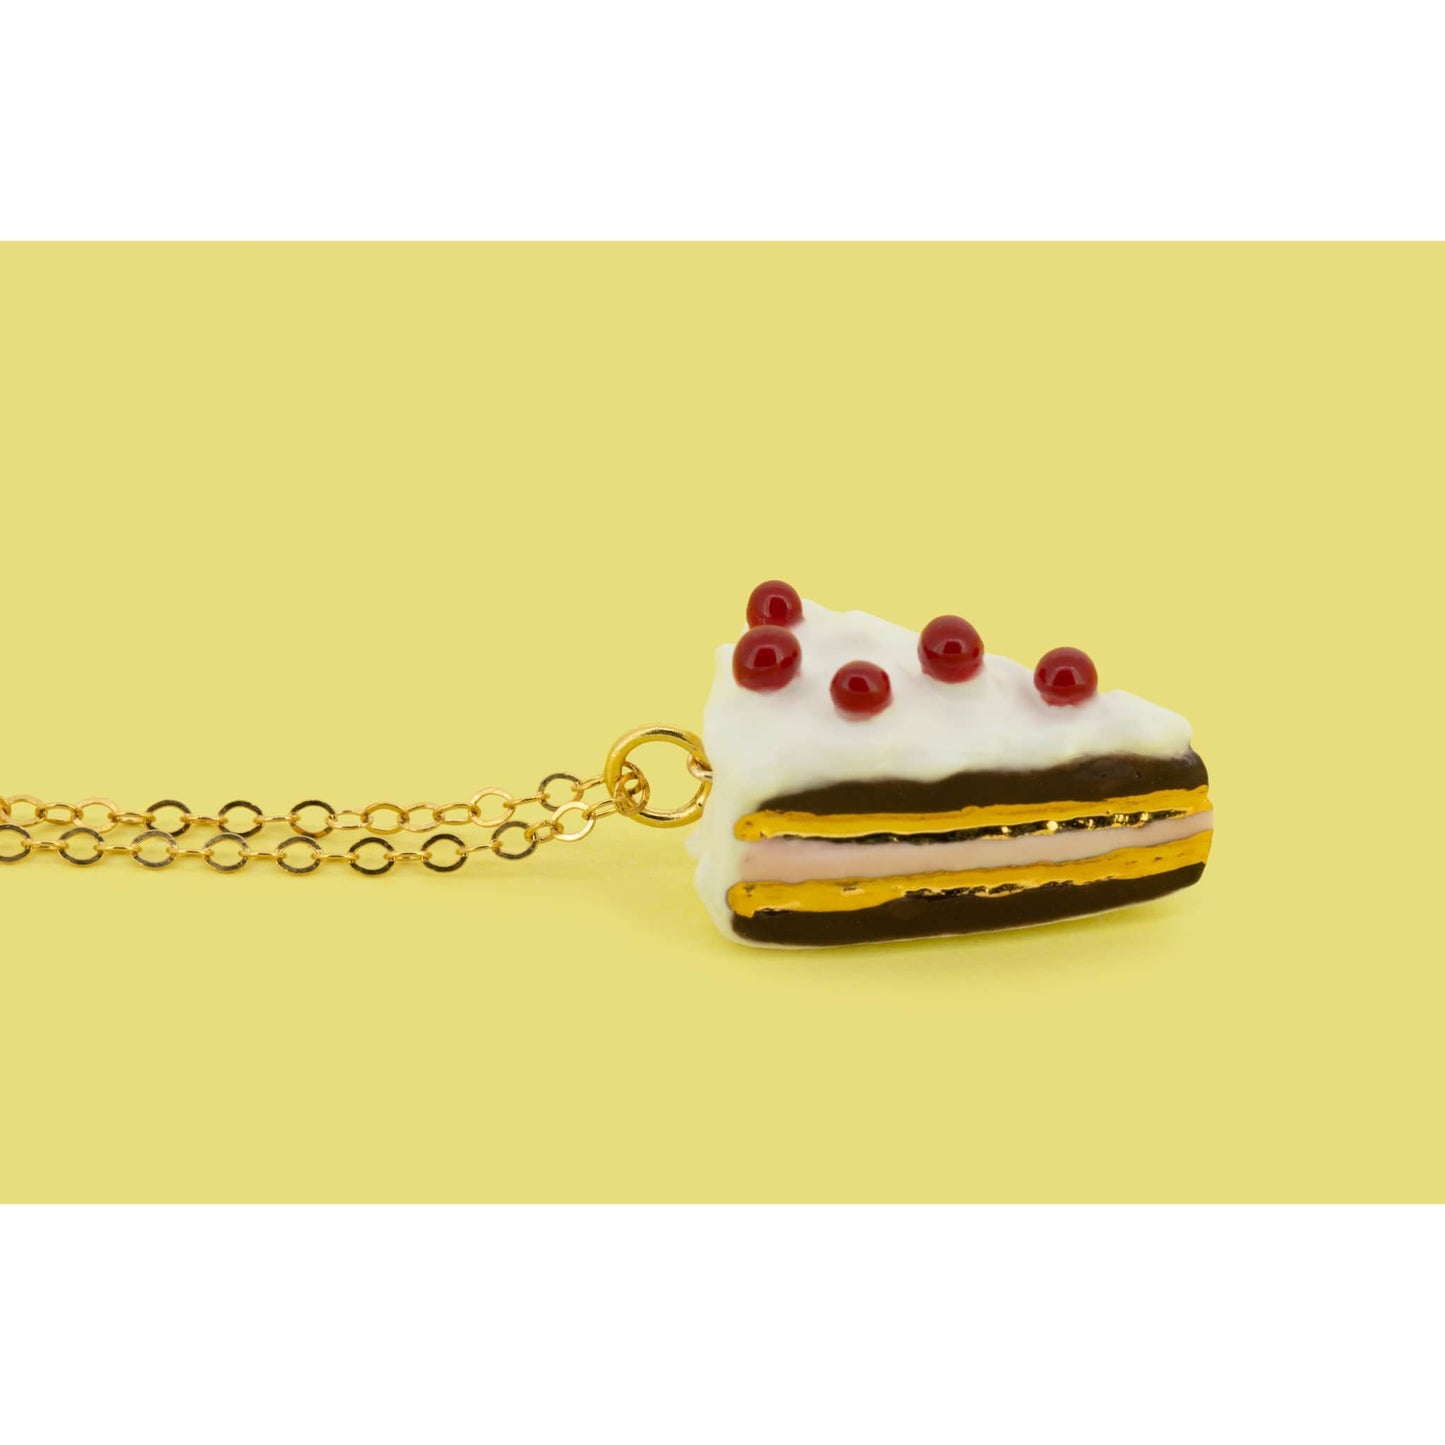 Cake Jewellery Necklace - Slice Of Happiness